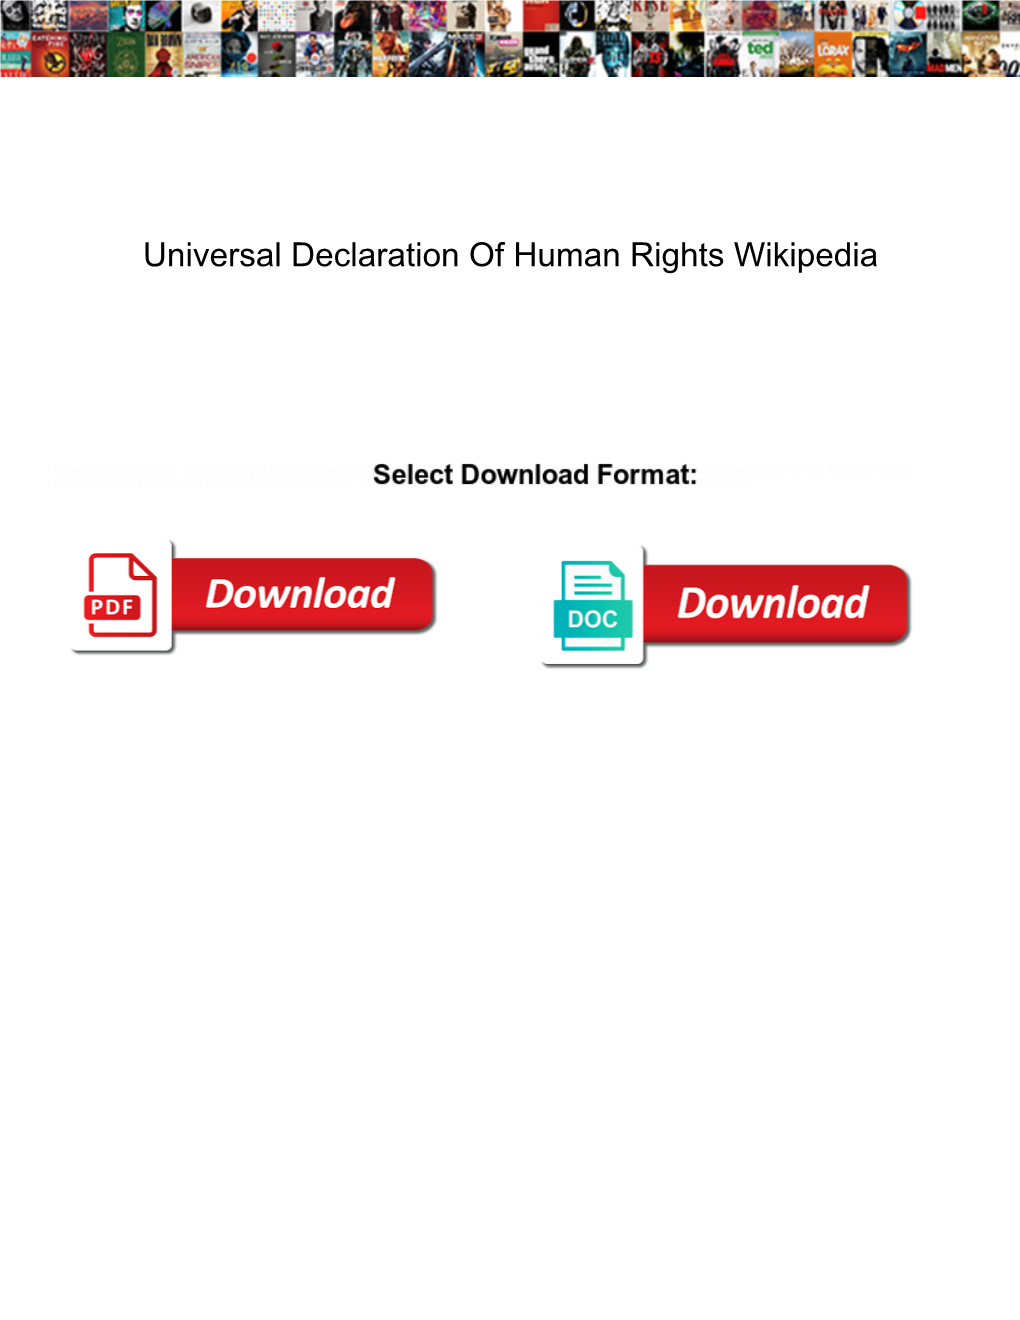 Universal Declaration of Human Rights Wikipedia